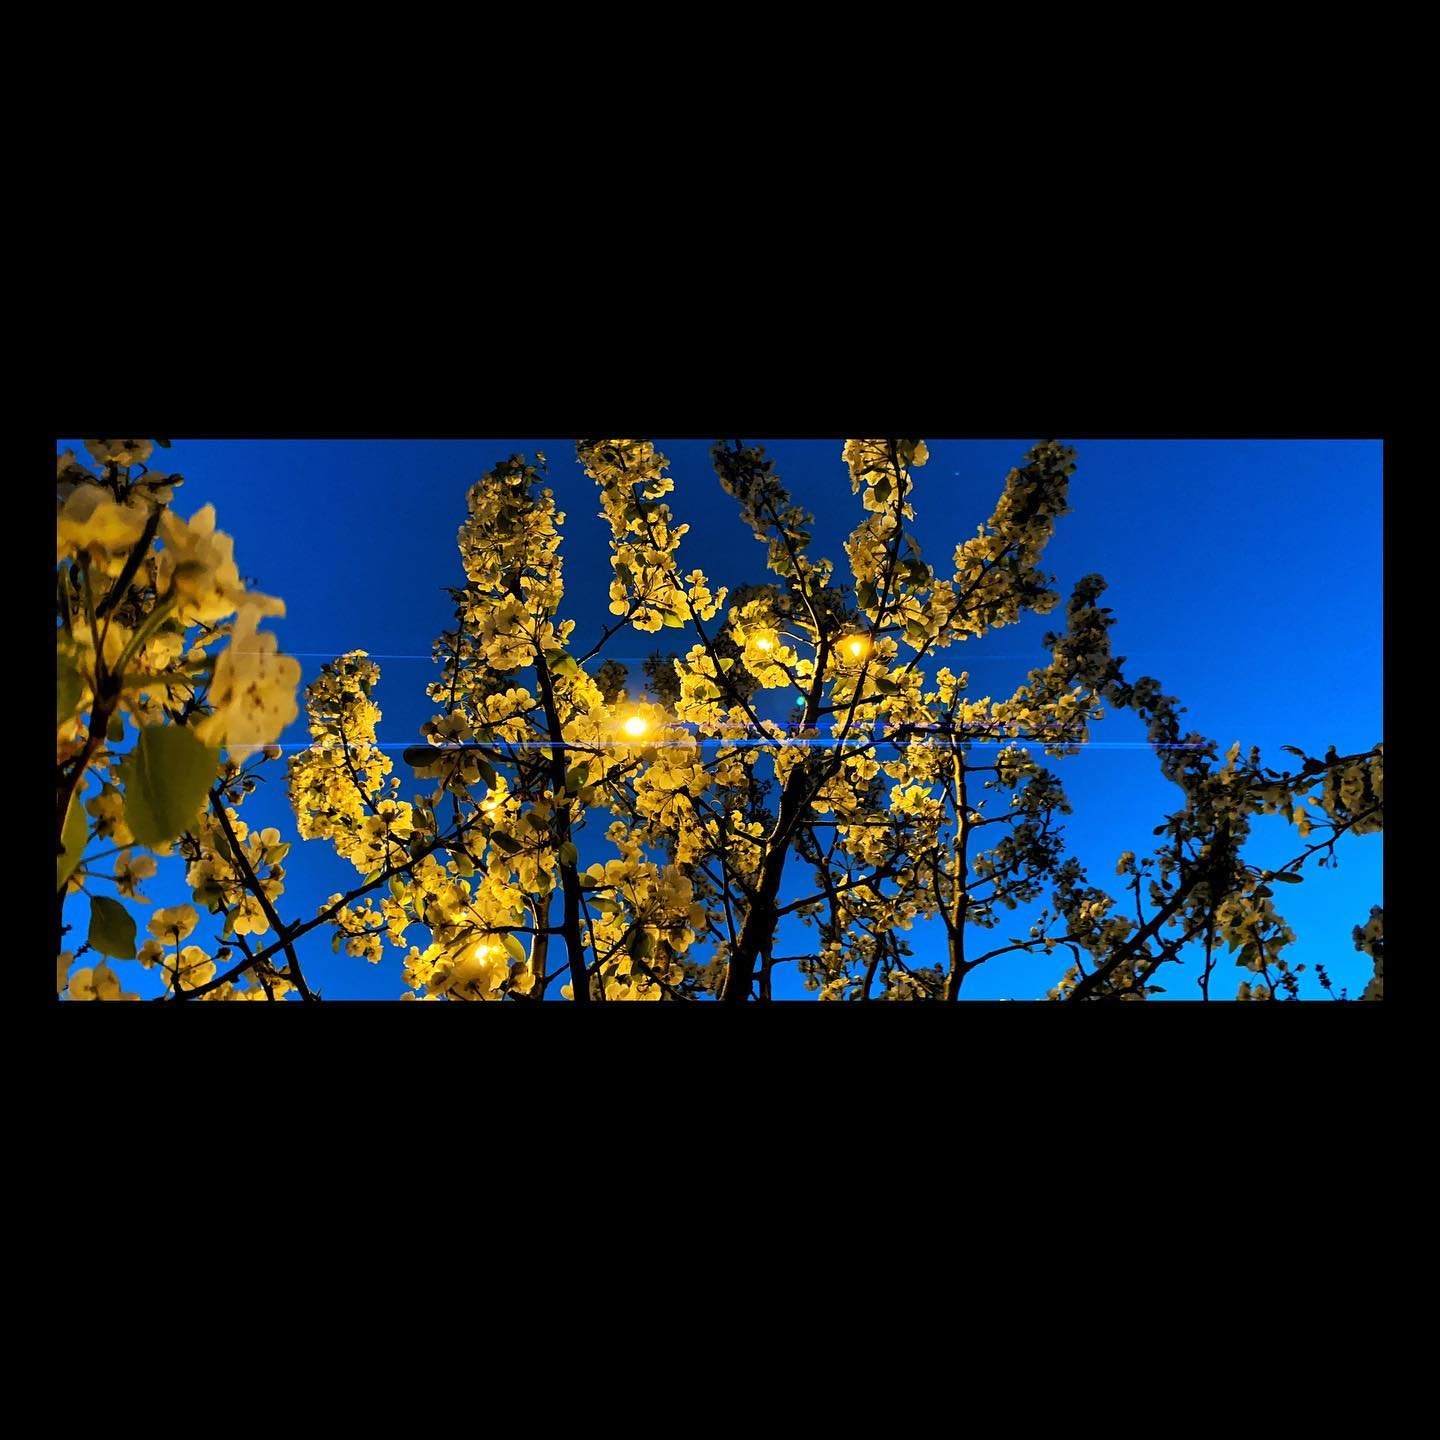 Contrast #yellows #blues #momentanamorphic #momentlens #snapseed #whitagram #dusk #spring #stringlights #quarantine #socialdistancing #notcrazyyet